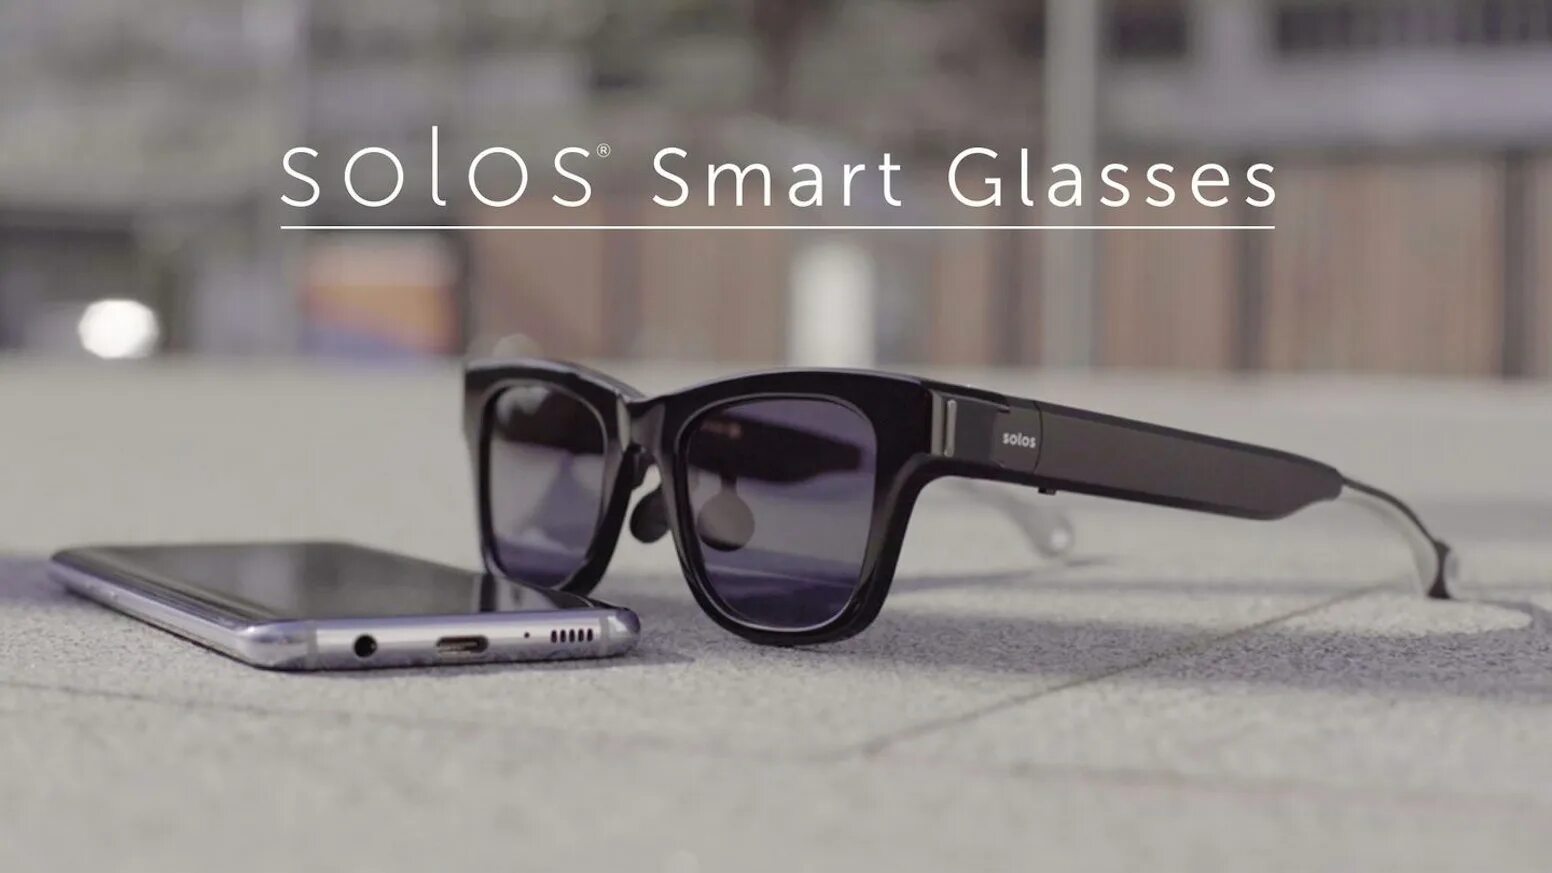 Xiaomi Smart Glasses. Solos Smart Glasses. Умные очки с камерой. Очки ксиоми с камерой. Очки ксиоми